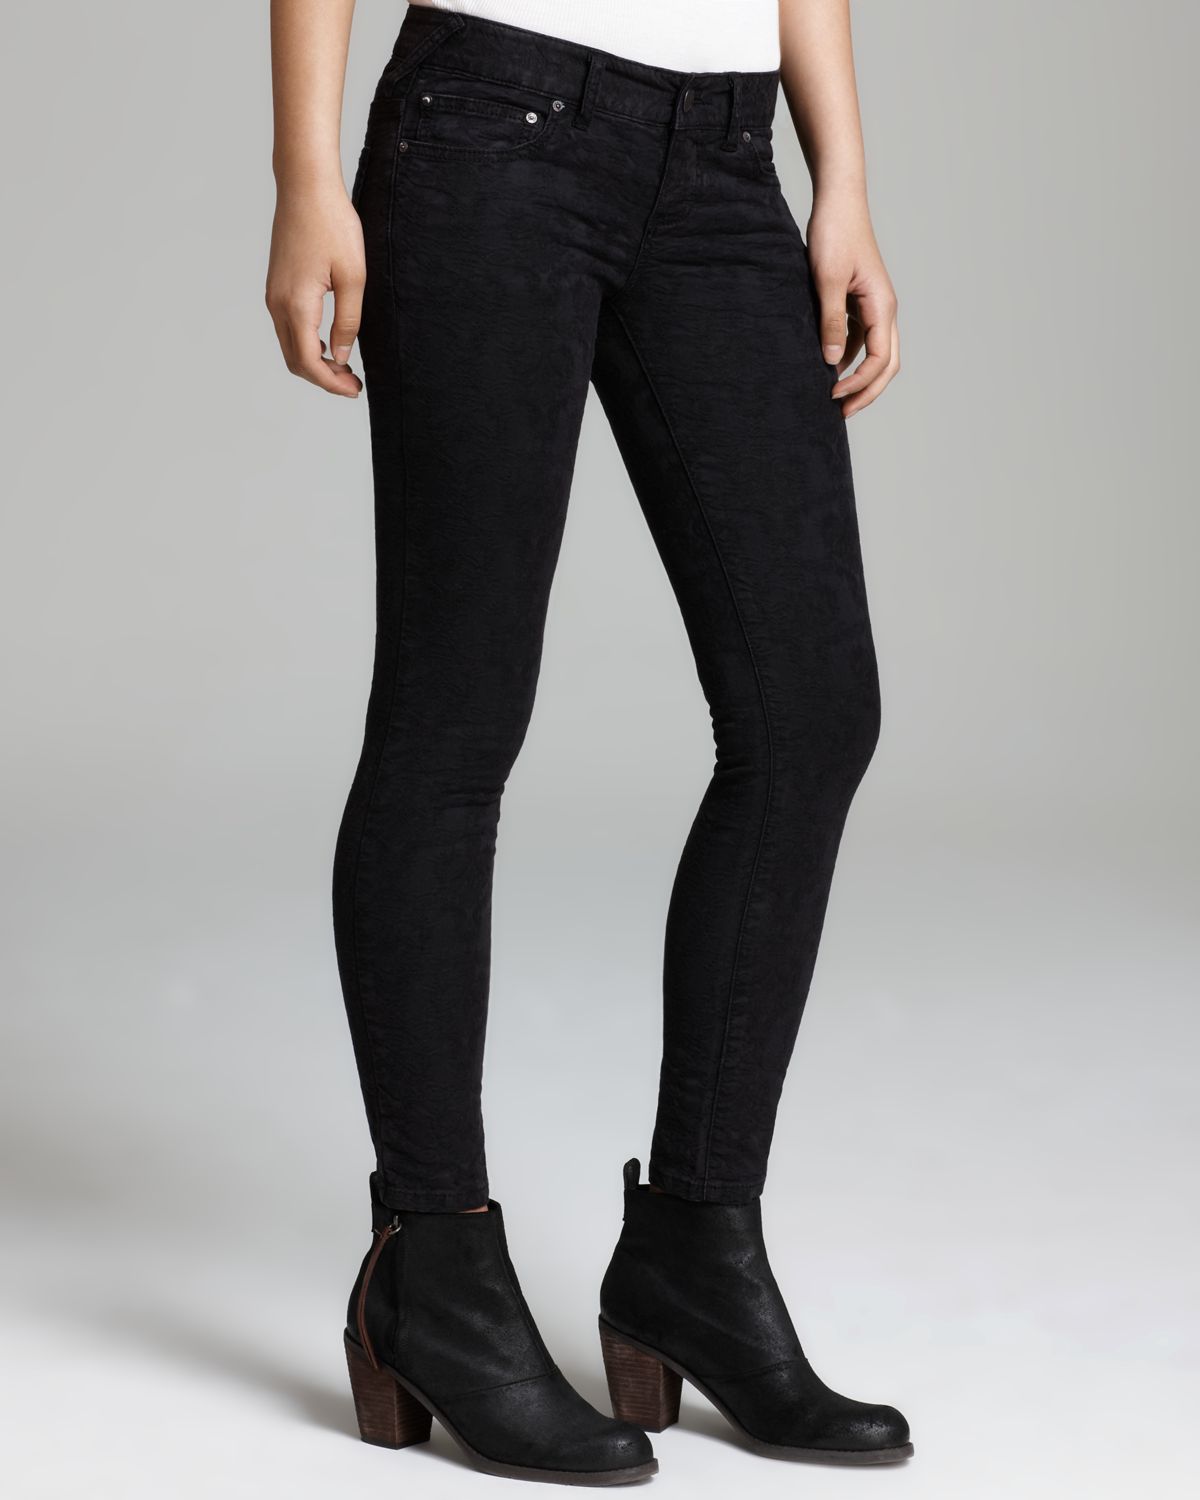 Free People Jeans Vintage Jacquard Skinny in Washed Black - Lyst